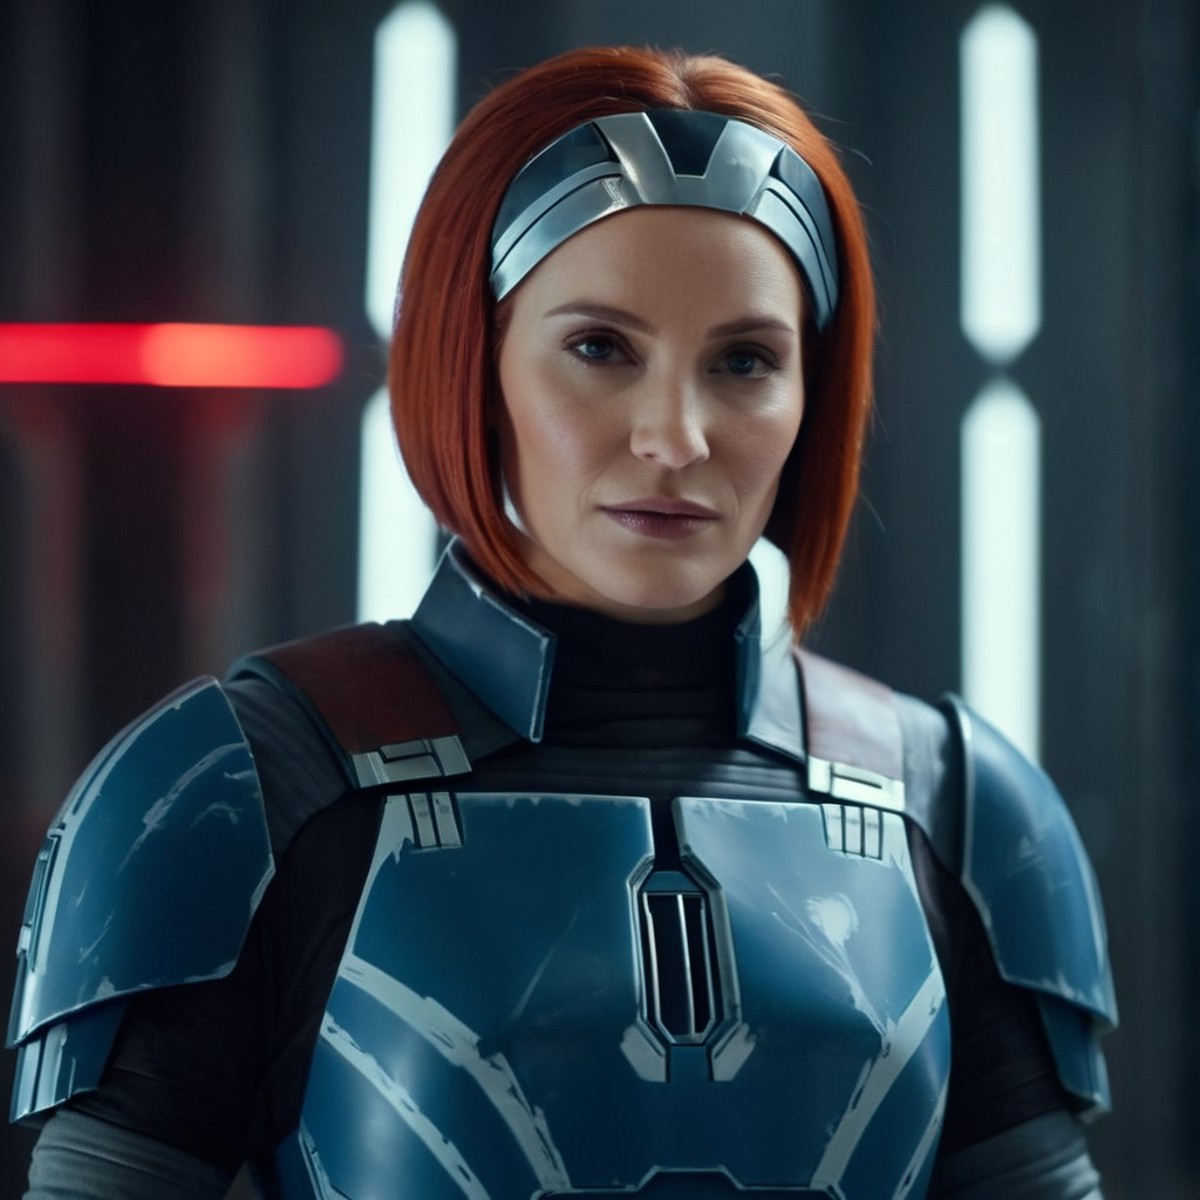 cinematic film still of  <lora:Bo-Katan Kryze:1.2>
Bo-Katan Kryze a red hair woman in a futuristic blue suit in star wars ...